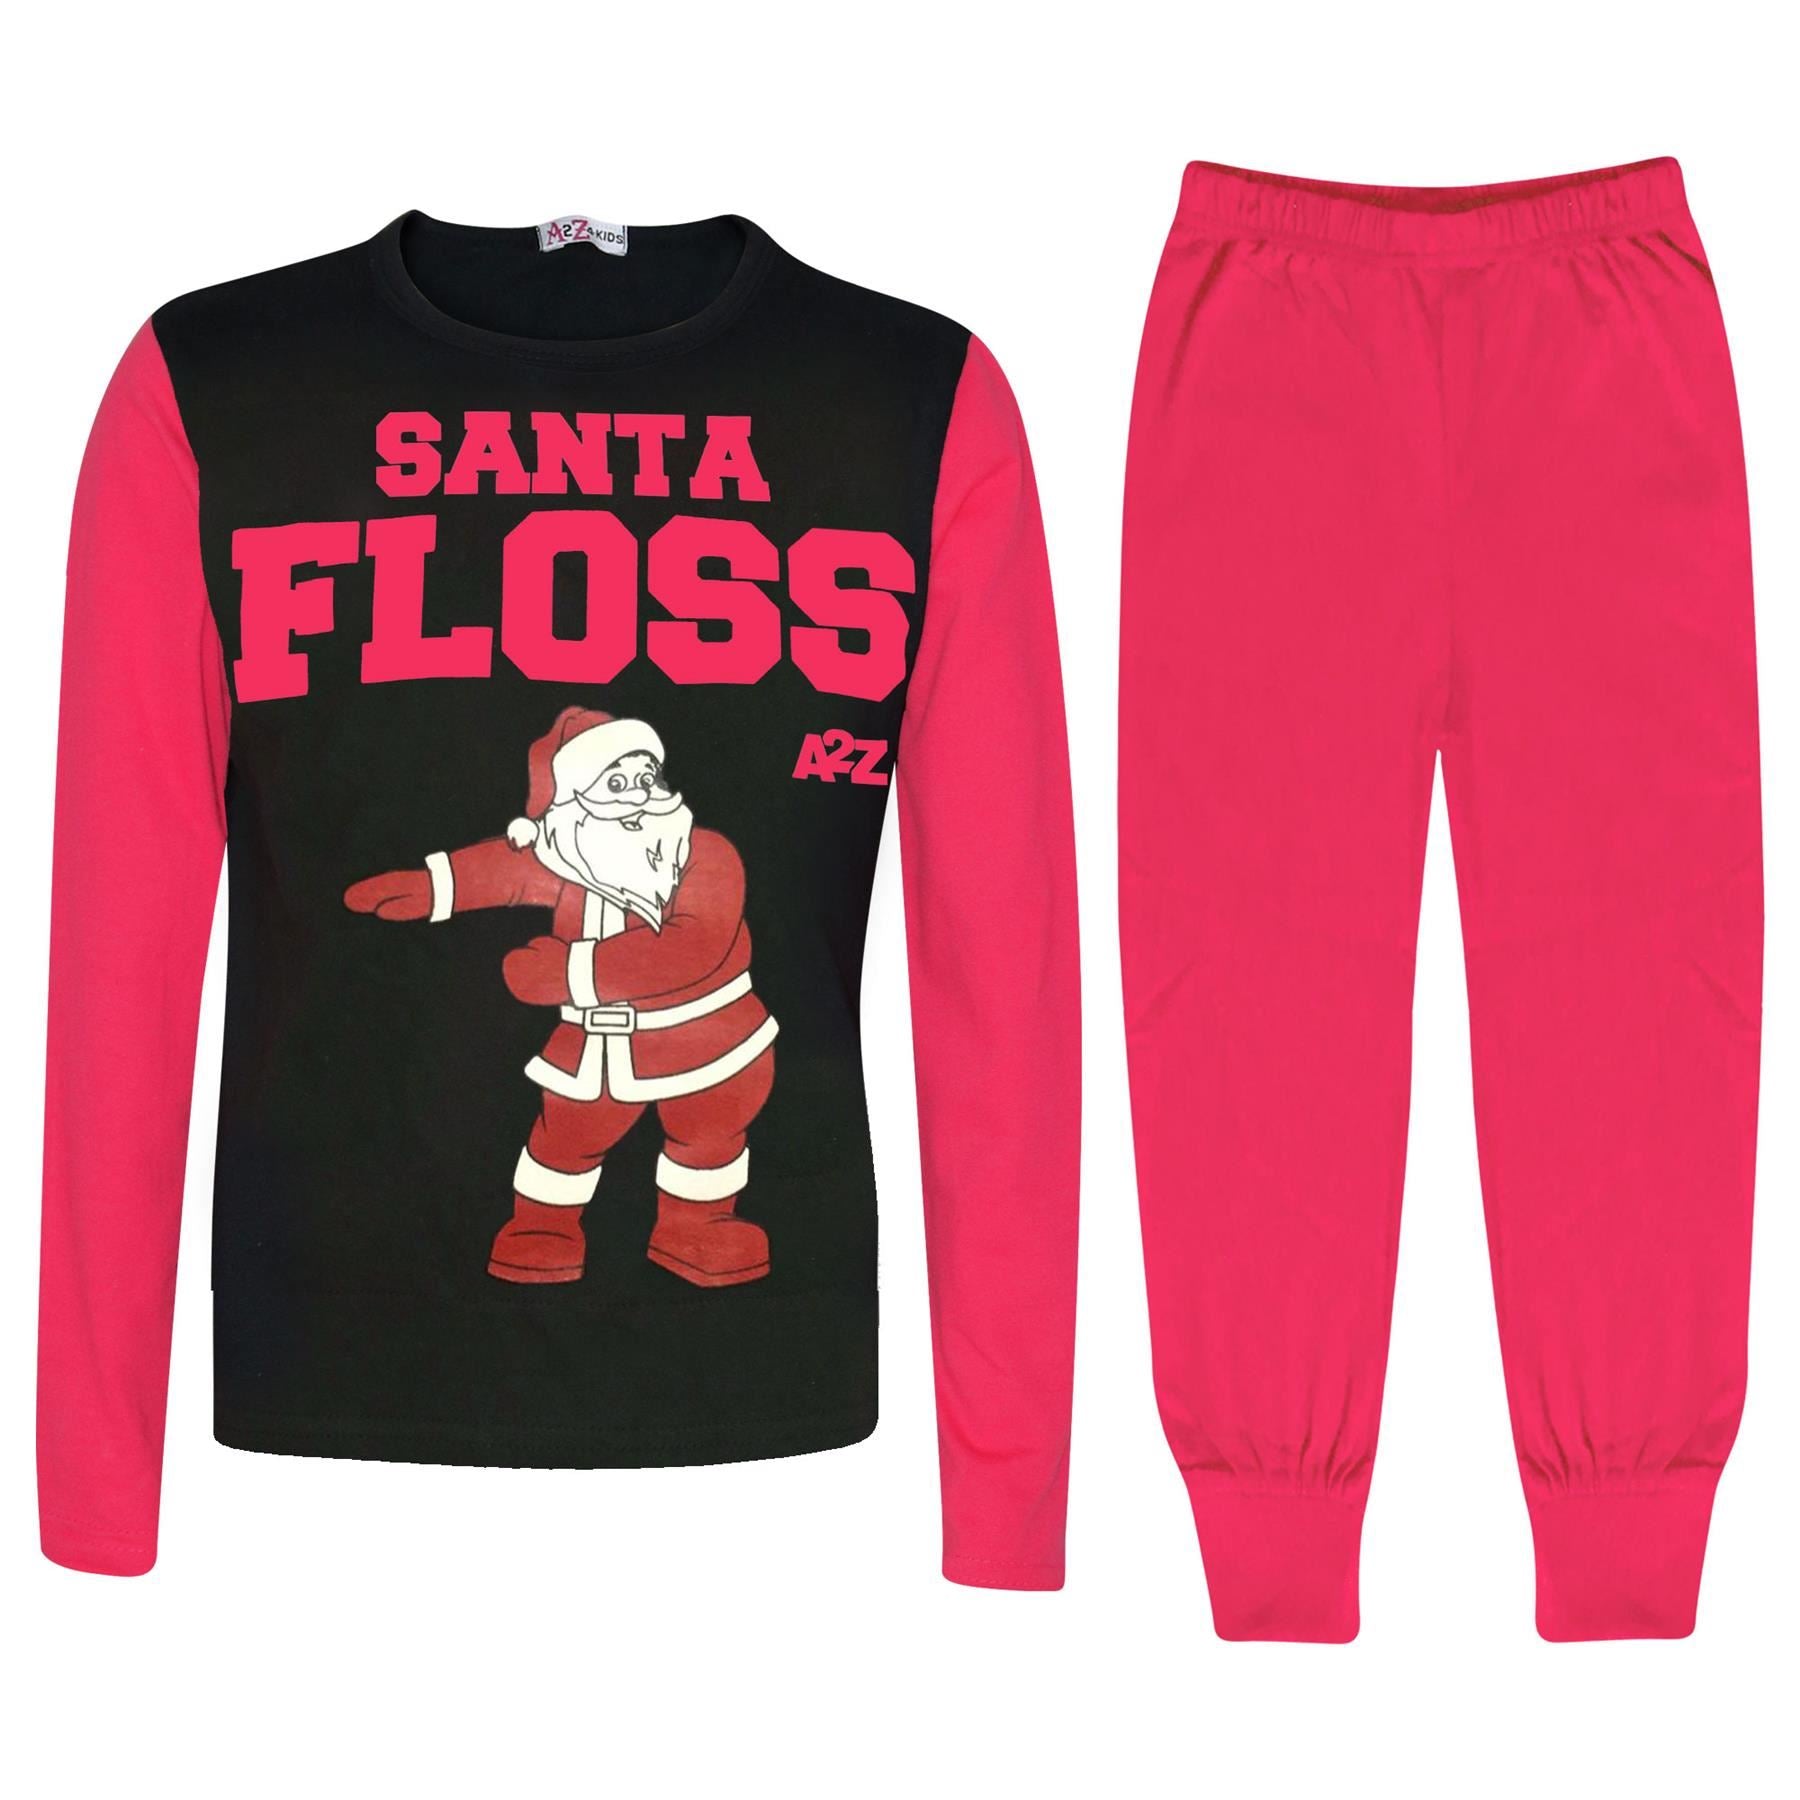 Kids Unisex Santa Floss A2Z Christmas Pyjamas Outfits Set